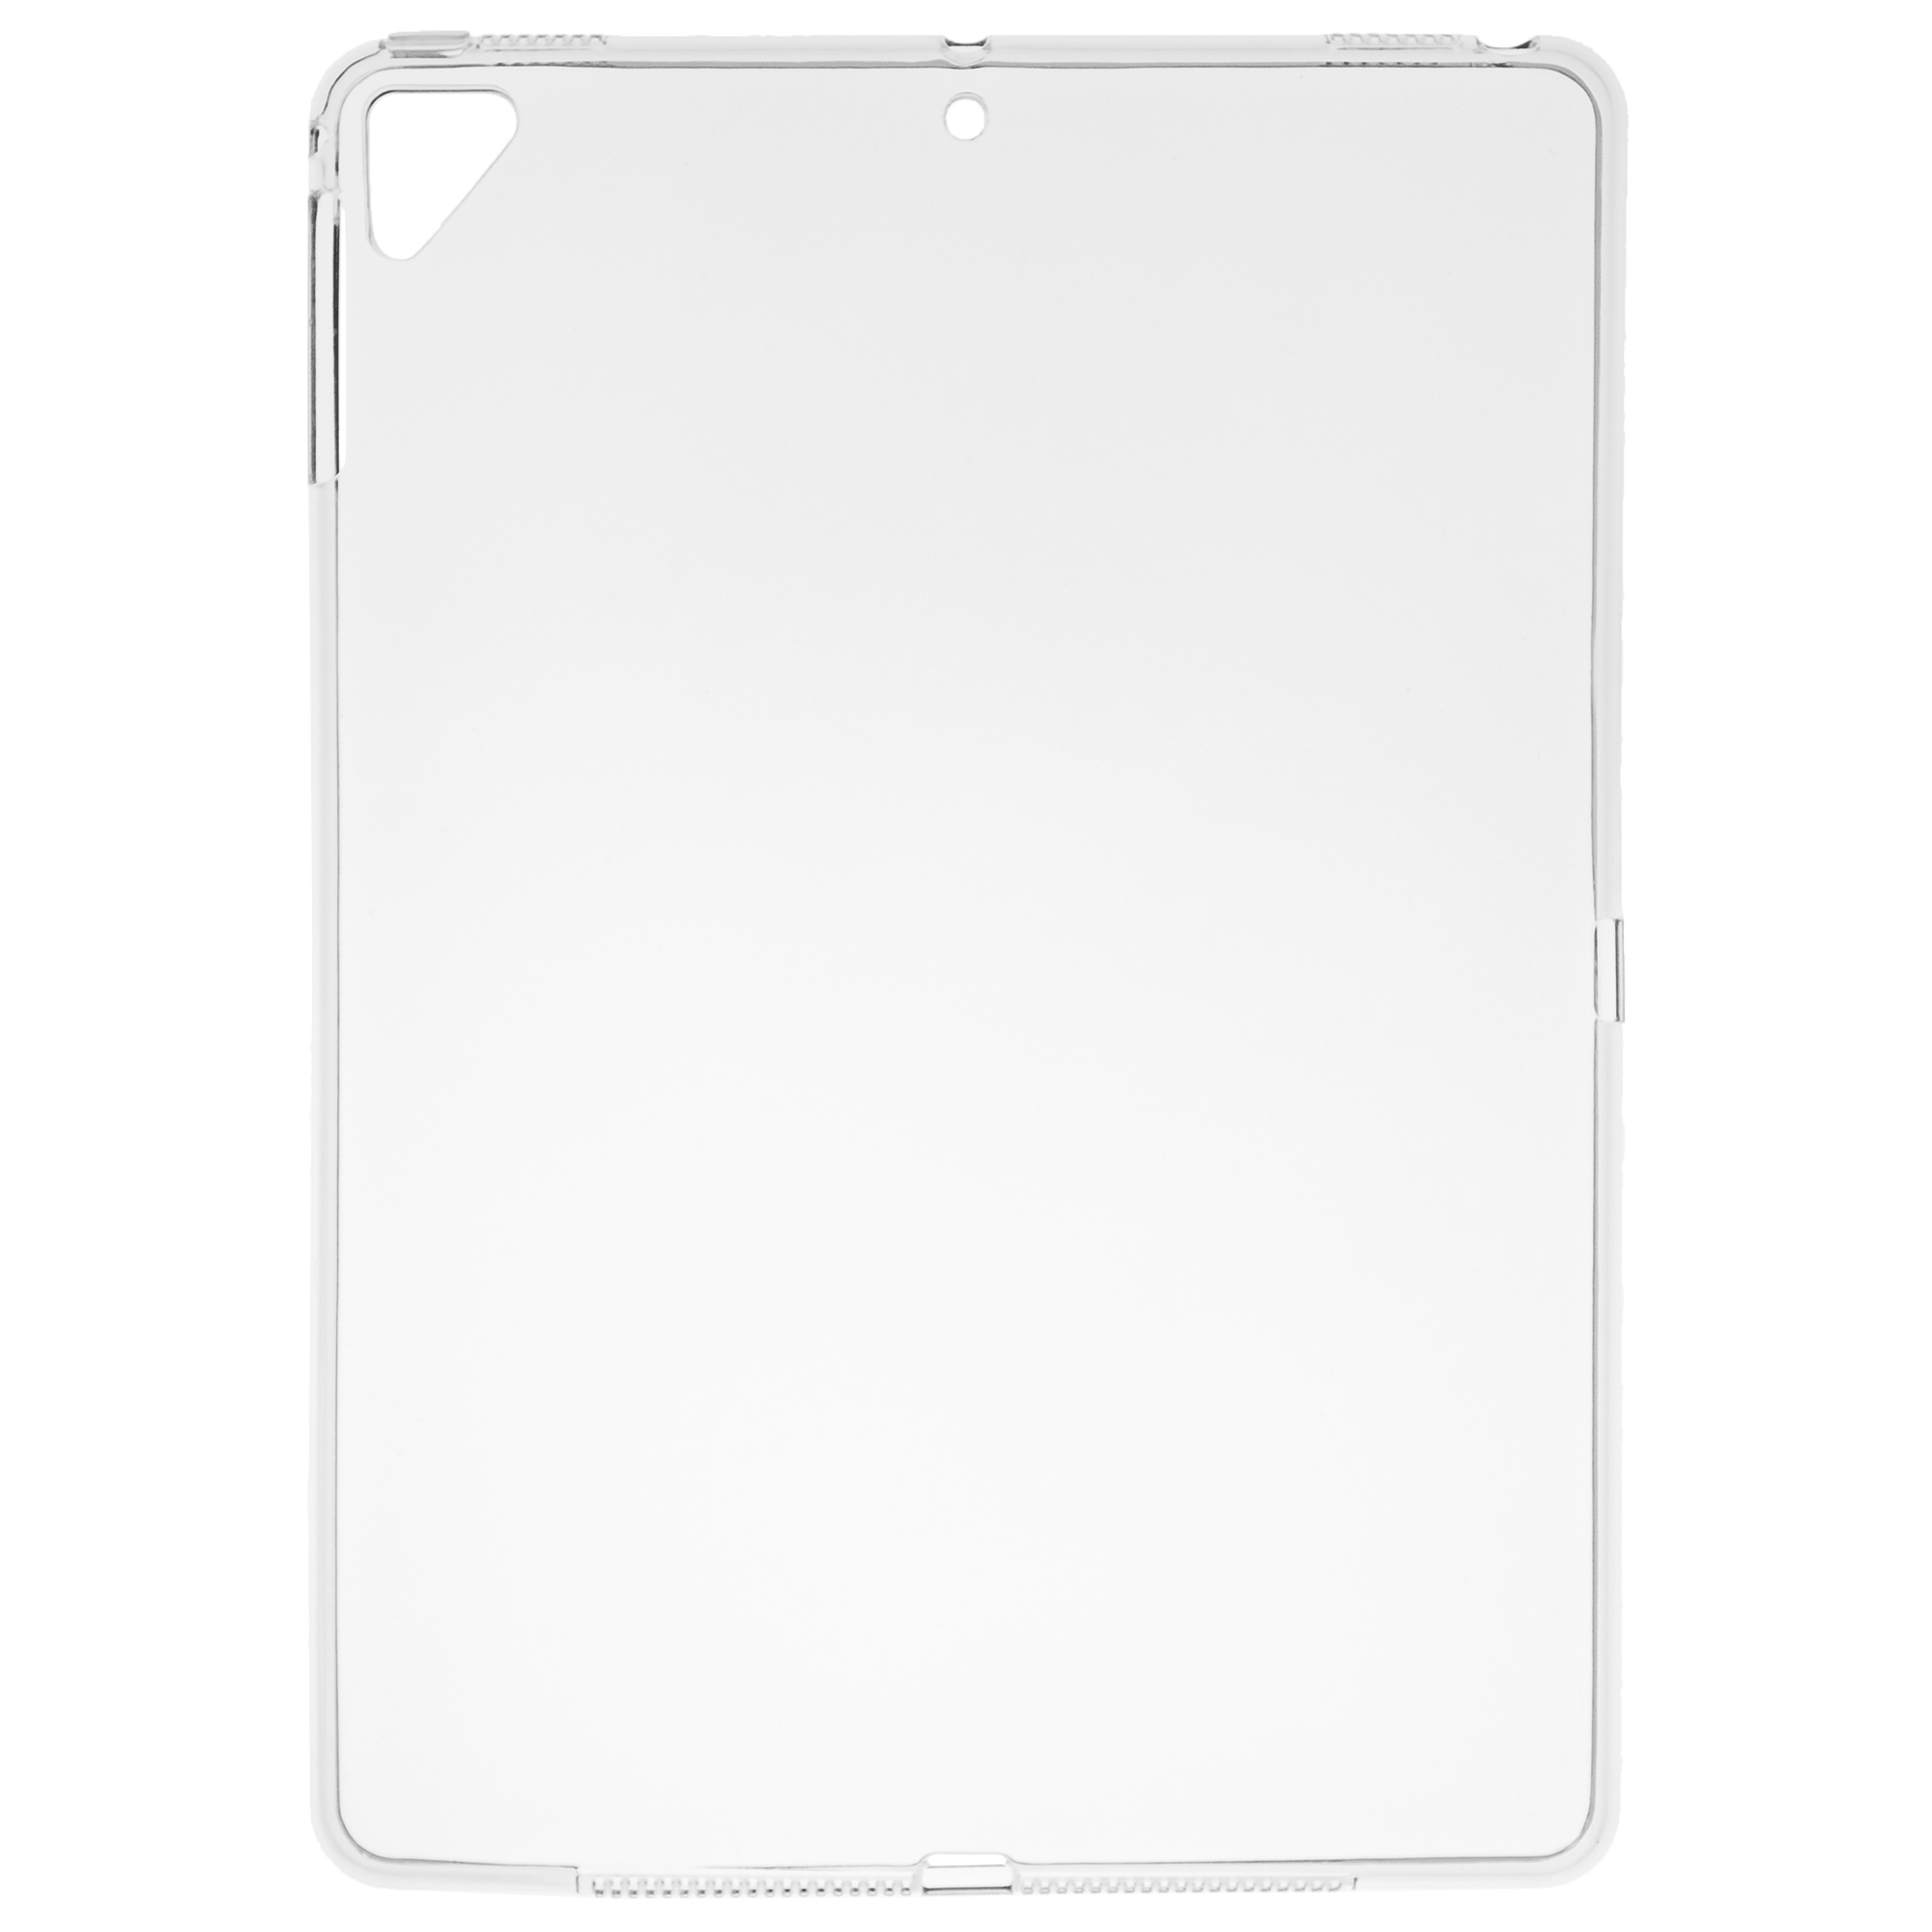 wagon Bevestiging moord Acrylic TPU iPad Pro (2016) 9,7-inch hoesje kopen? - Morgen in huis | Partly